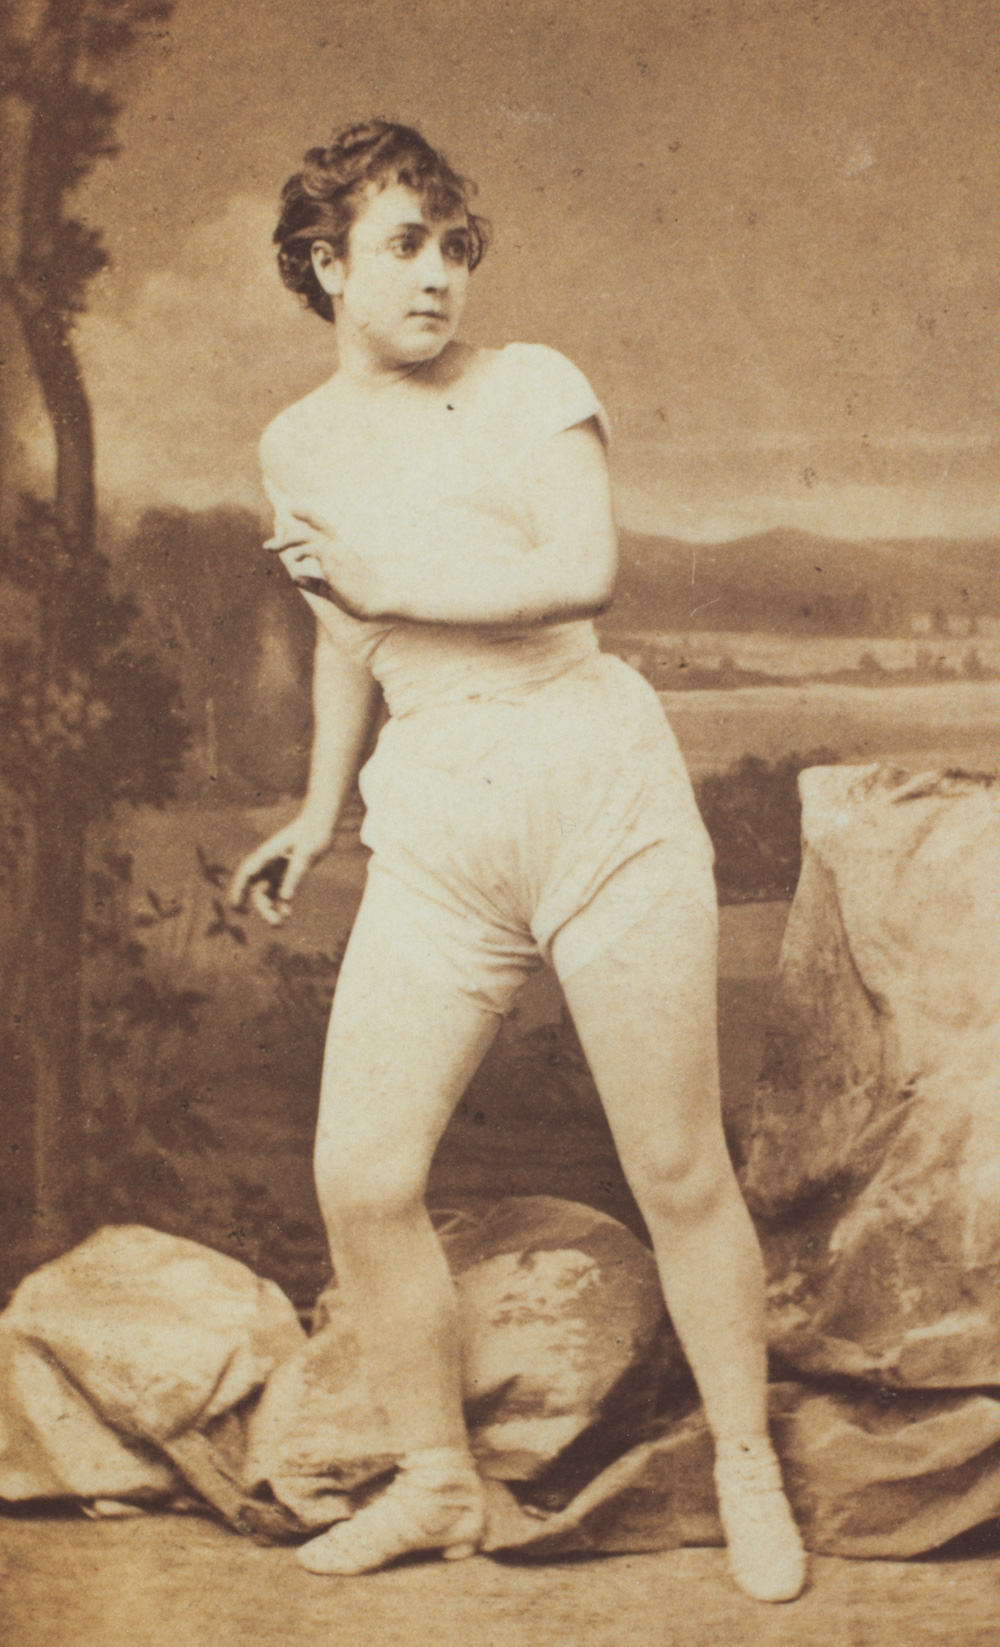 Adah Isaacs Menken as Mazeppa by Henry Mullins - 1864 Victoria and Albert Museum